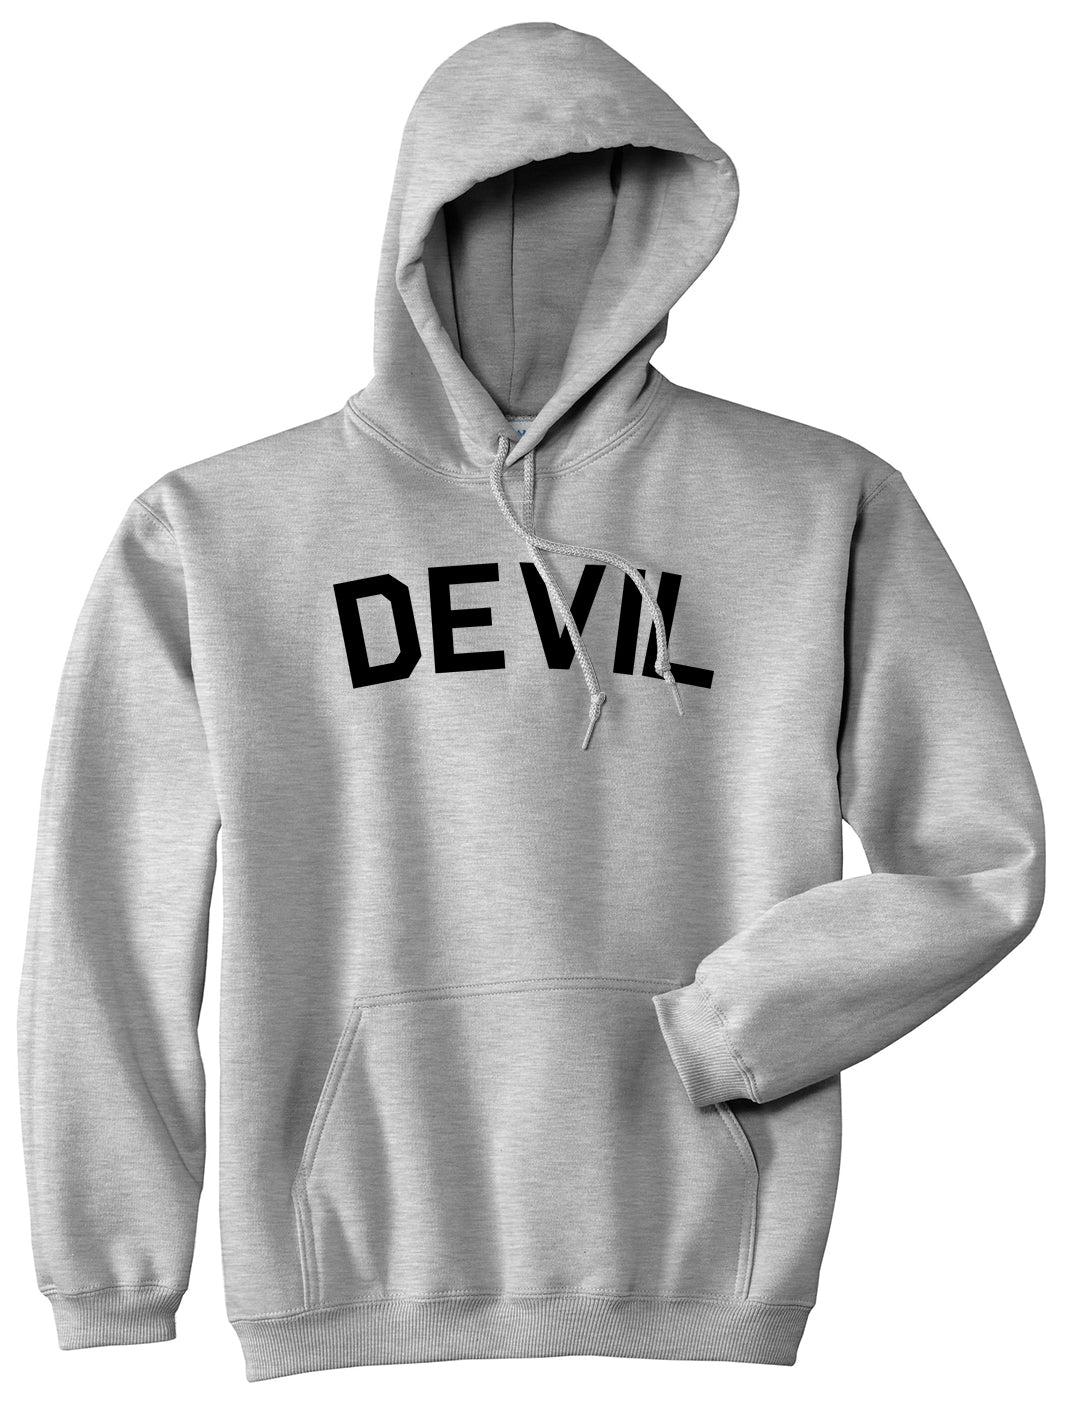 Devil Arch Goth Pullover Hoodie in Grey